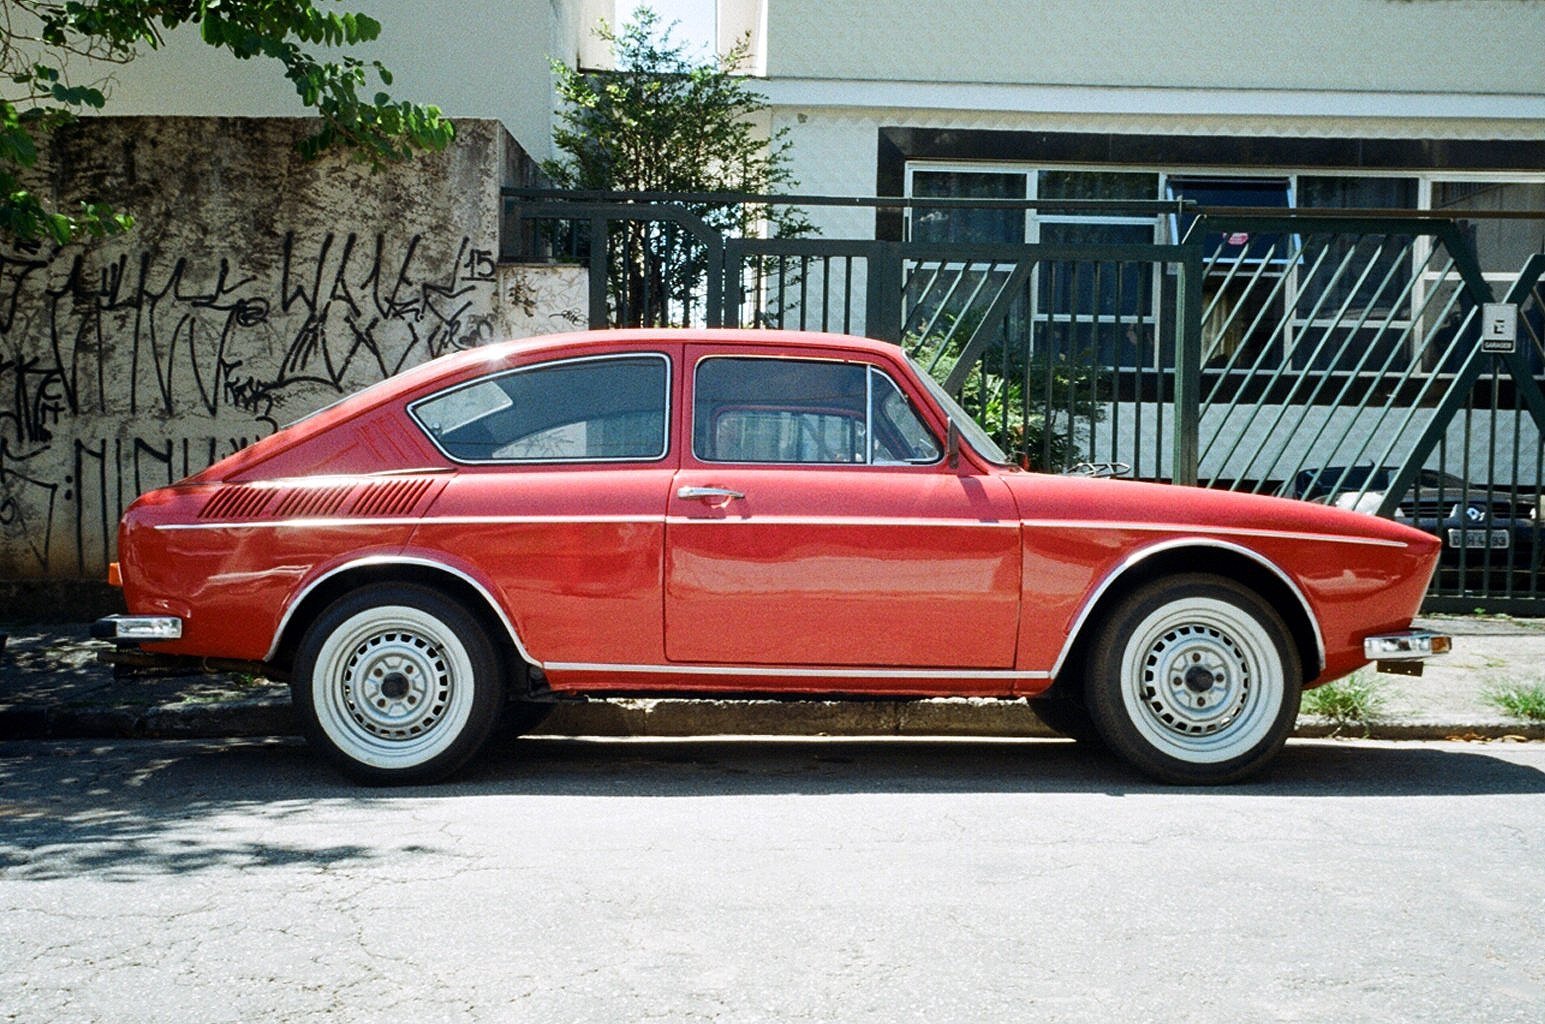  1970 Volkswagen 1600 TI Type 3 in Sao Paulo - Brazil 